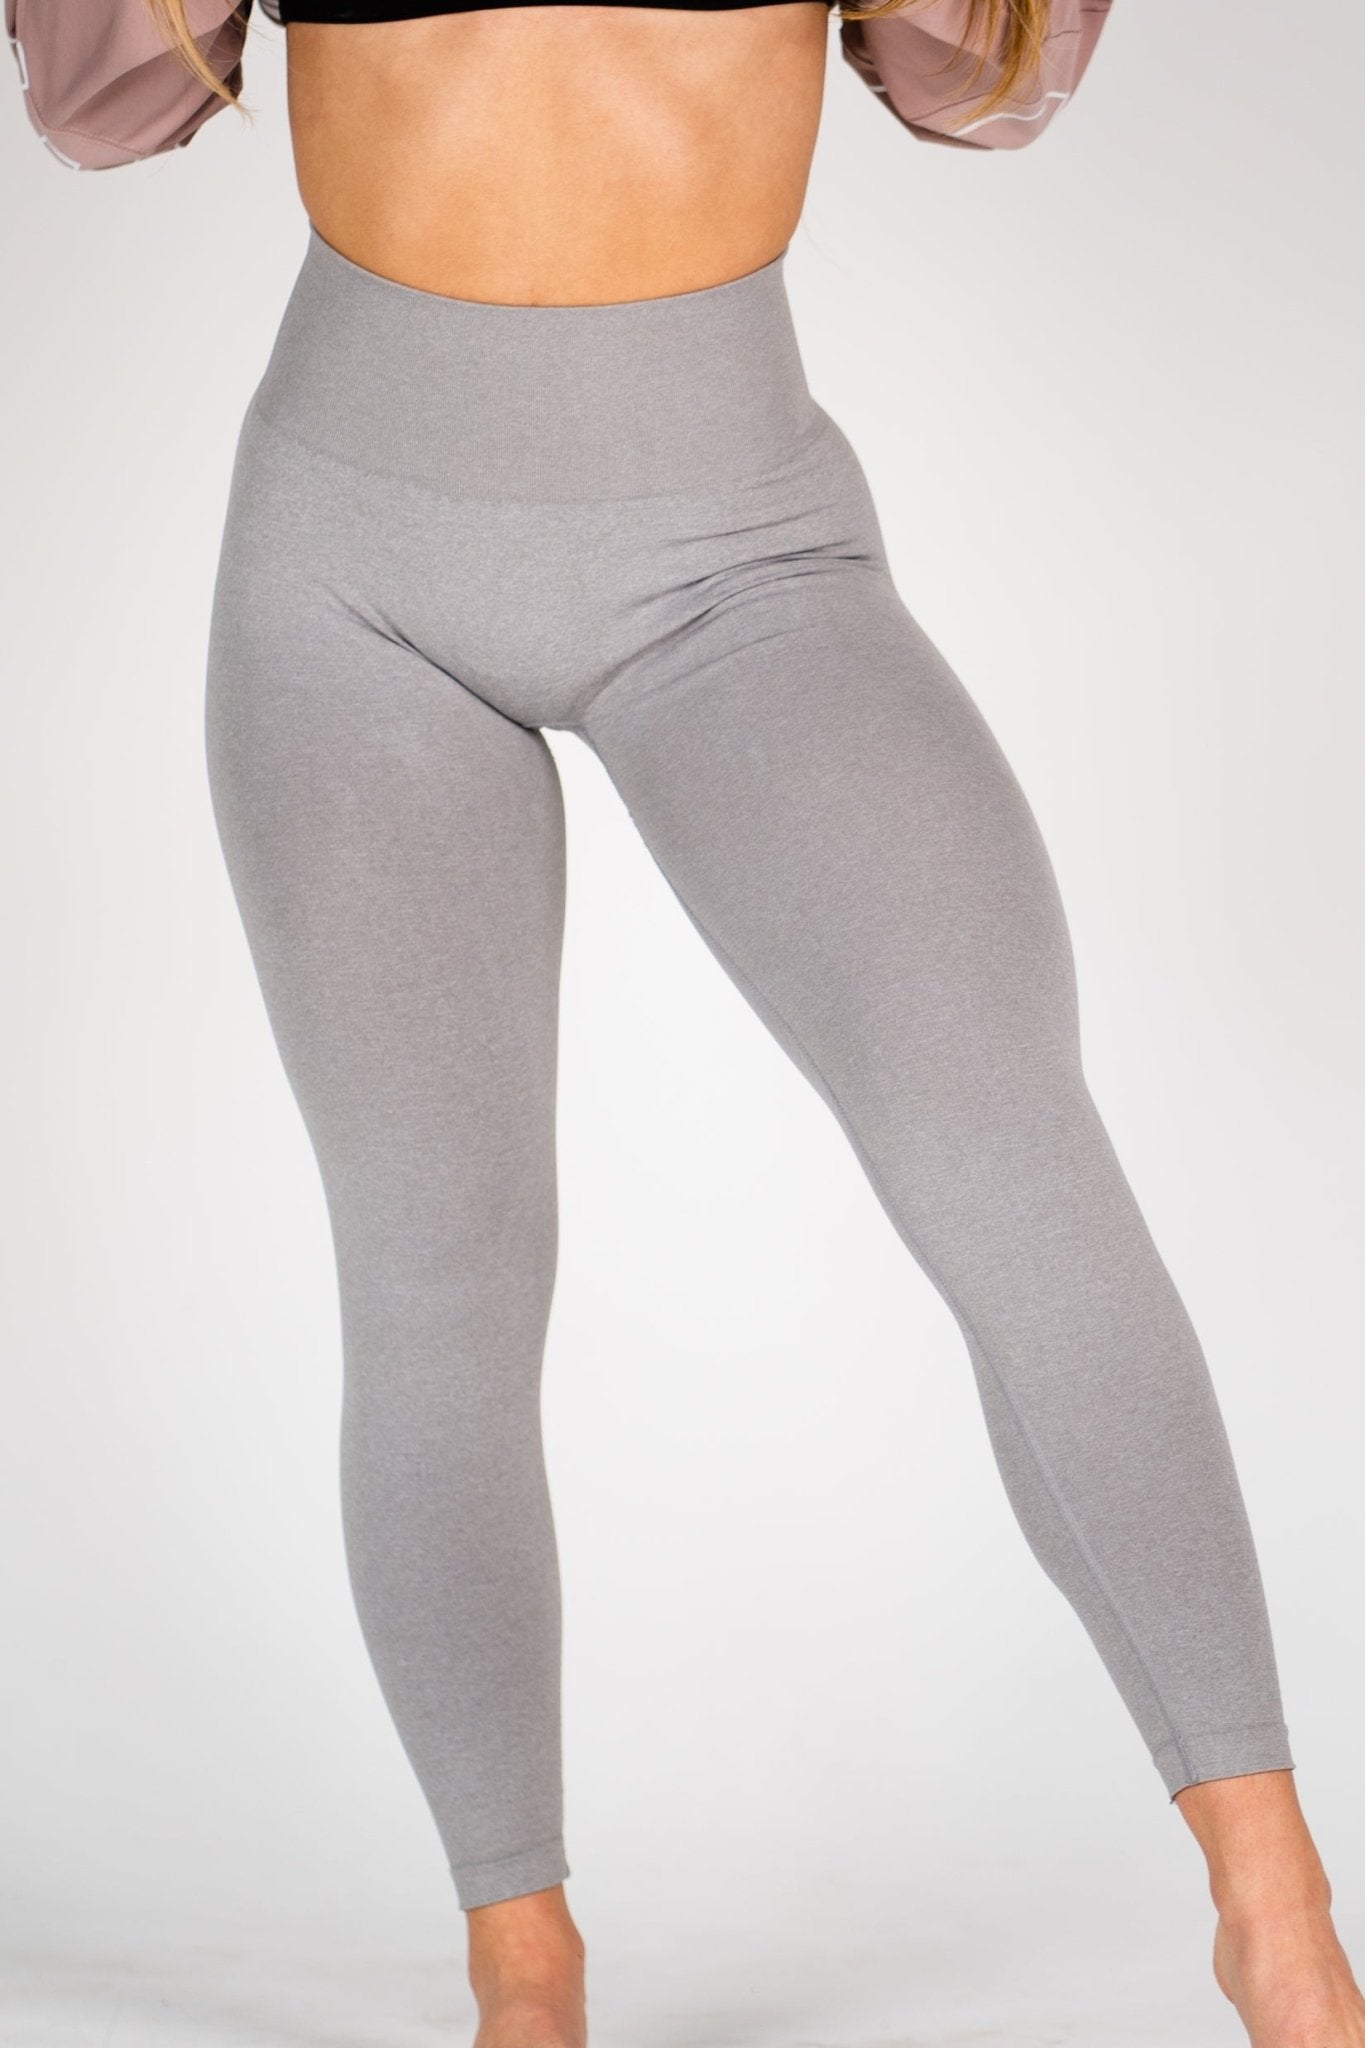 Legging glam light grey  glam legging - light grey - anahata fitwear